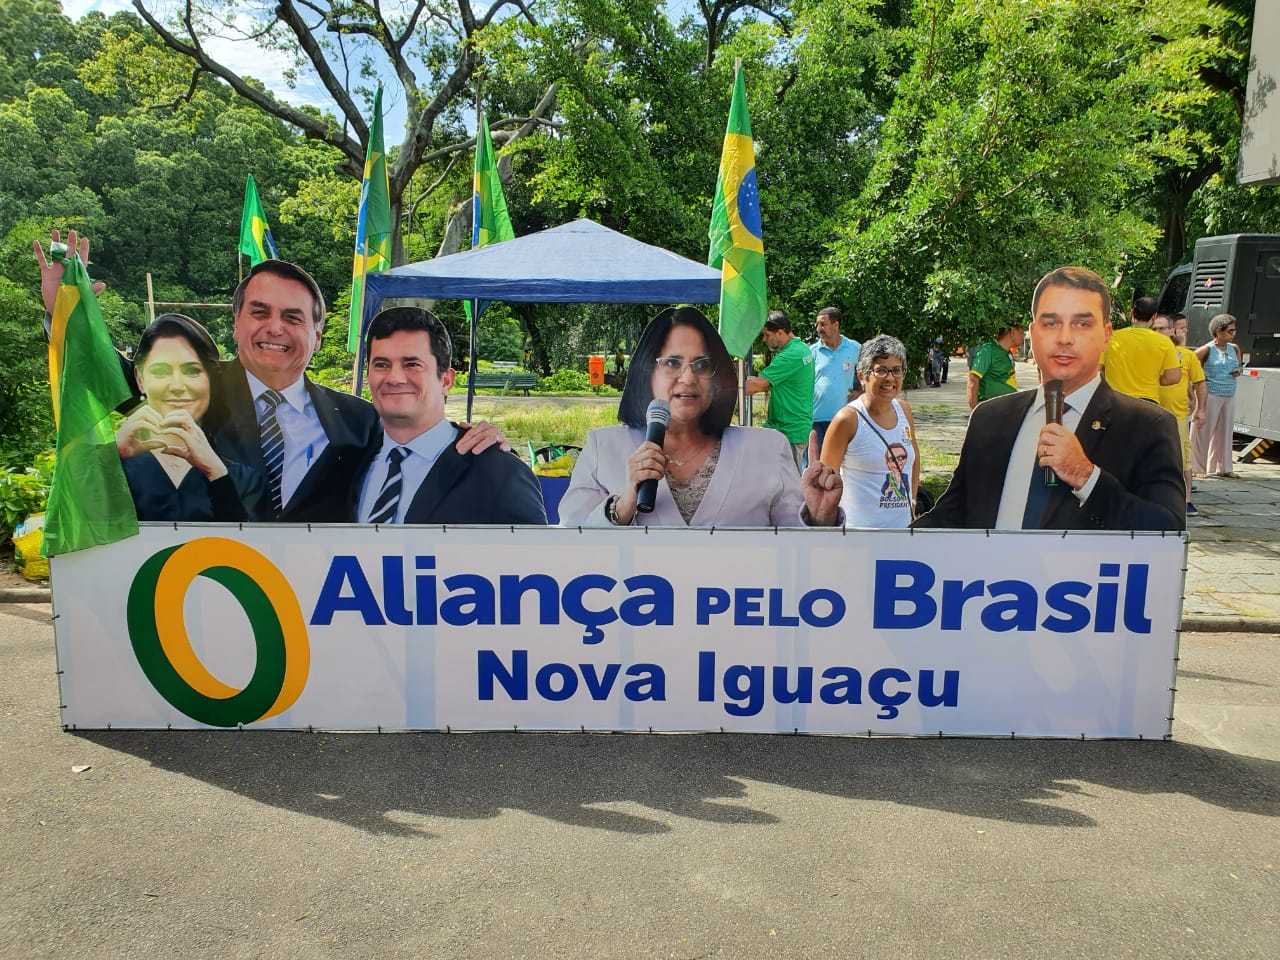 Brazil Alliance